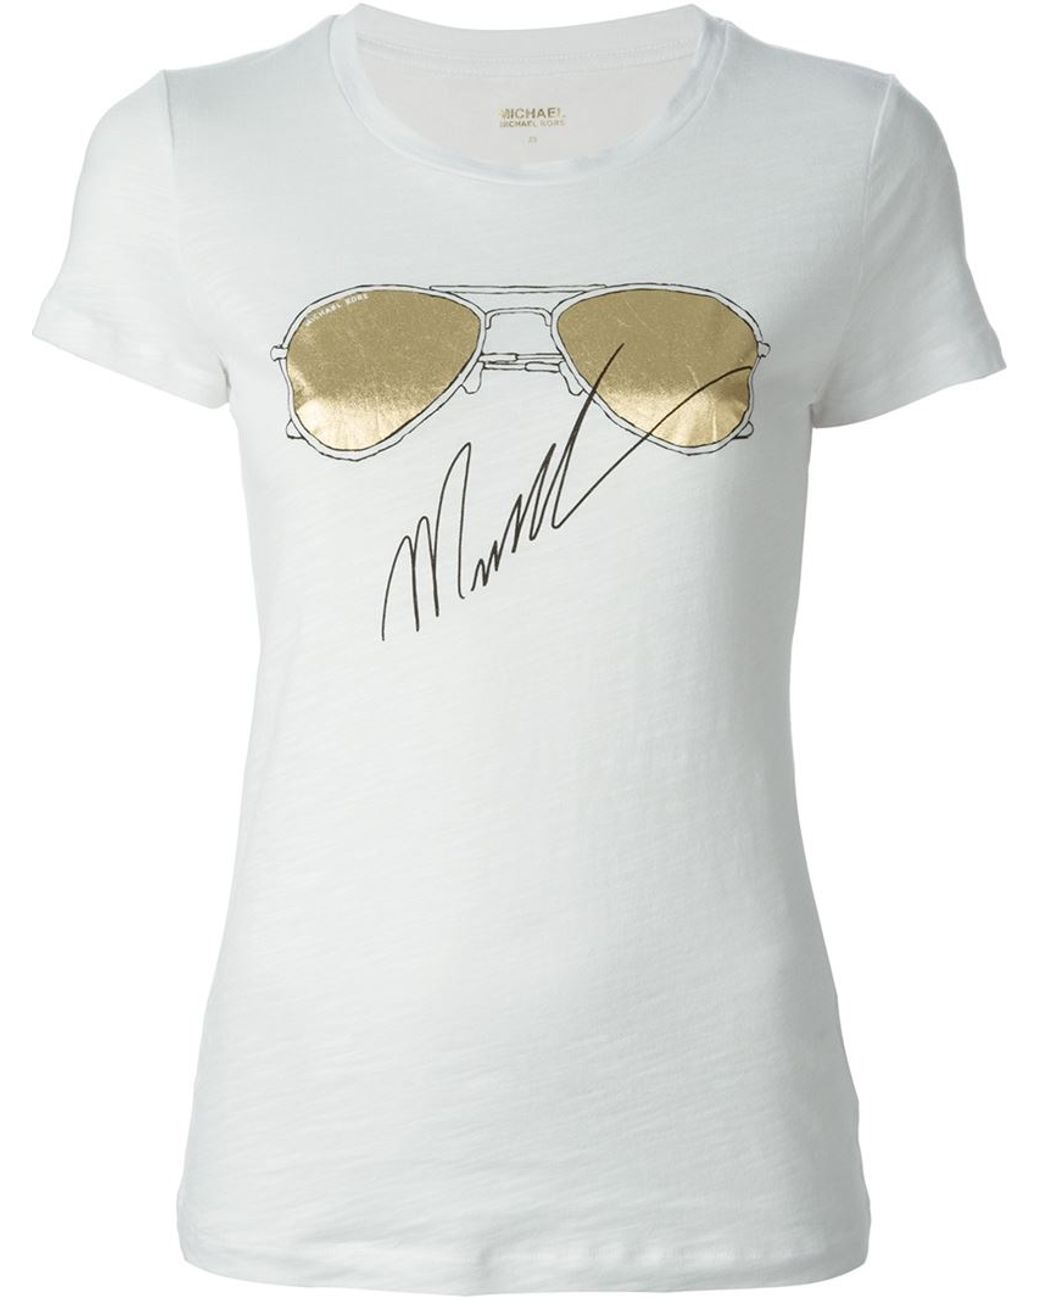 MICHAEL MICHAEL KORS Michael Kors Tshirt with MK logo  White  Michael  Michael Kors tshirt CS1507AFV4 online on GIGLIOCOM